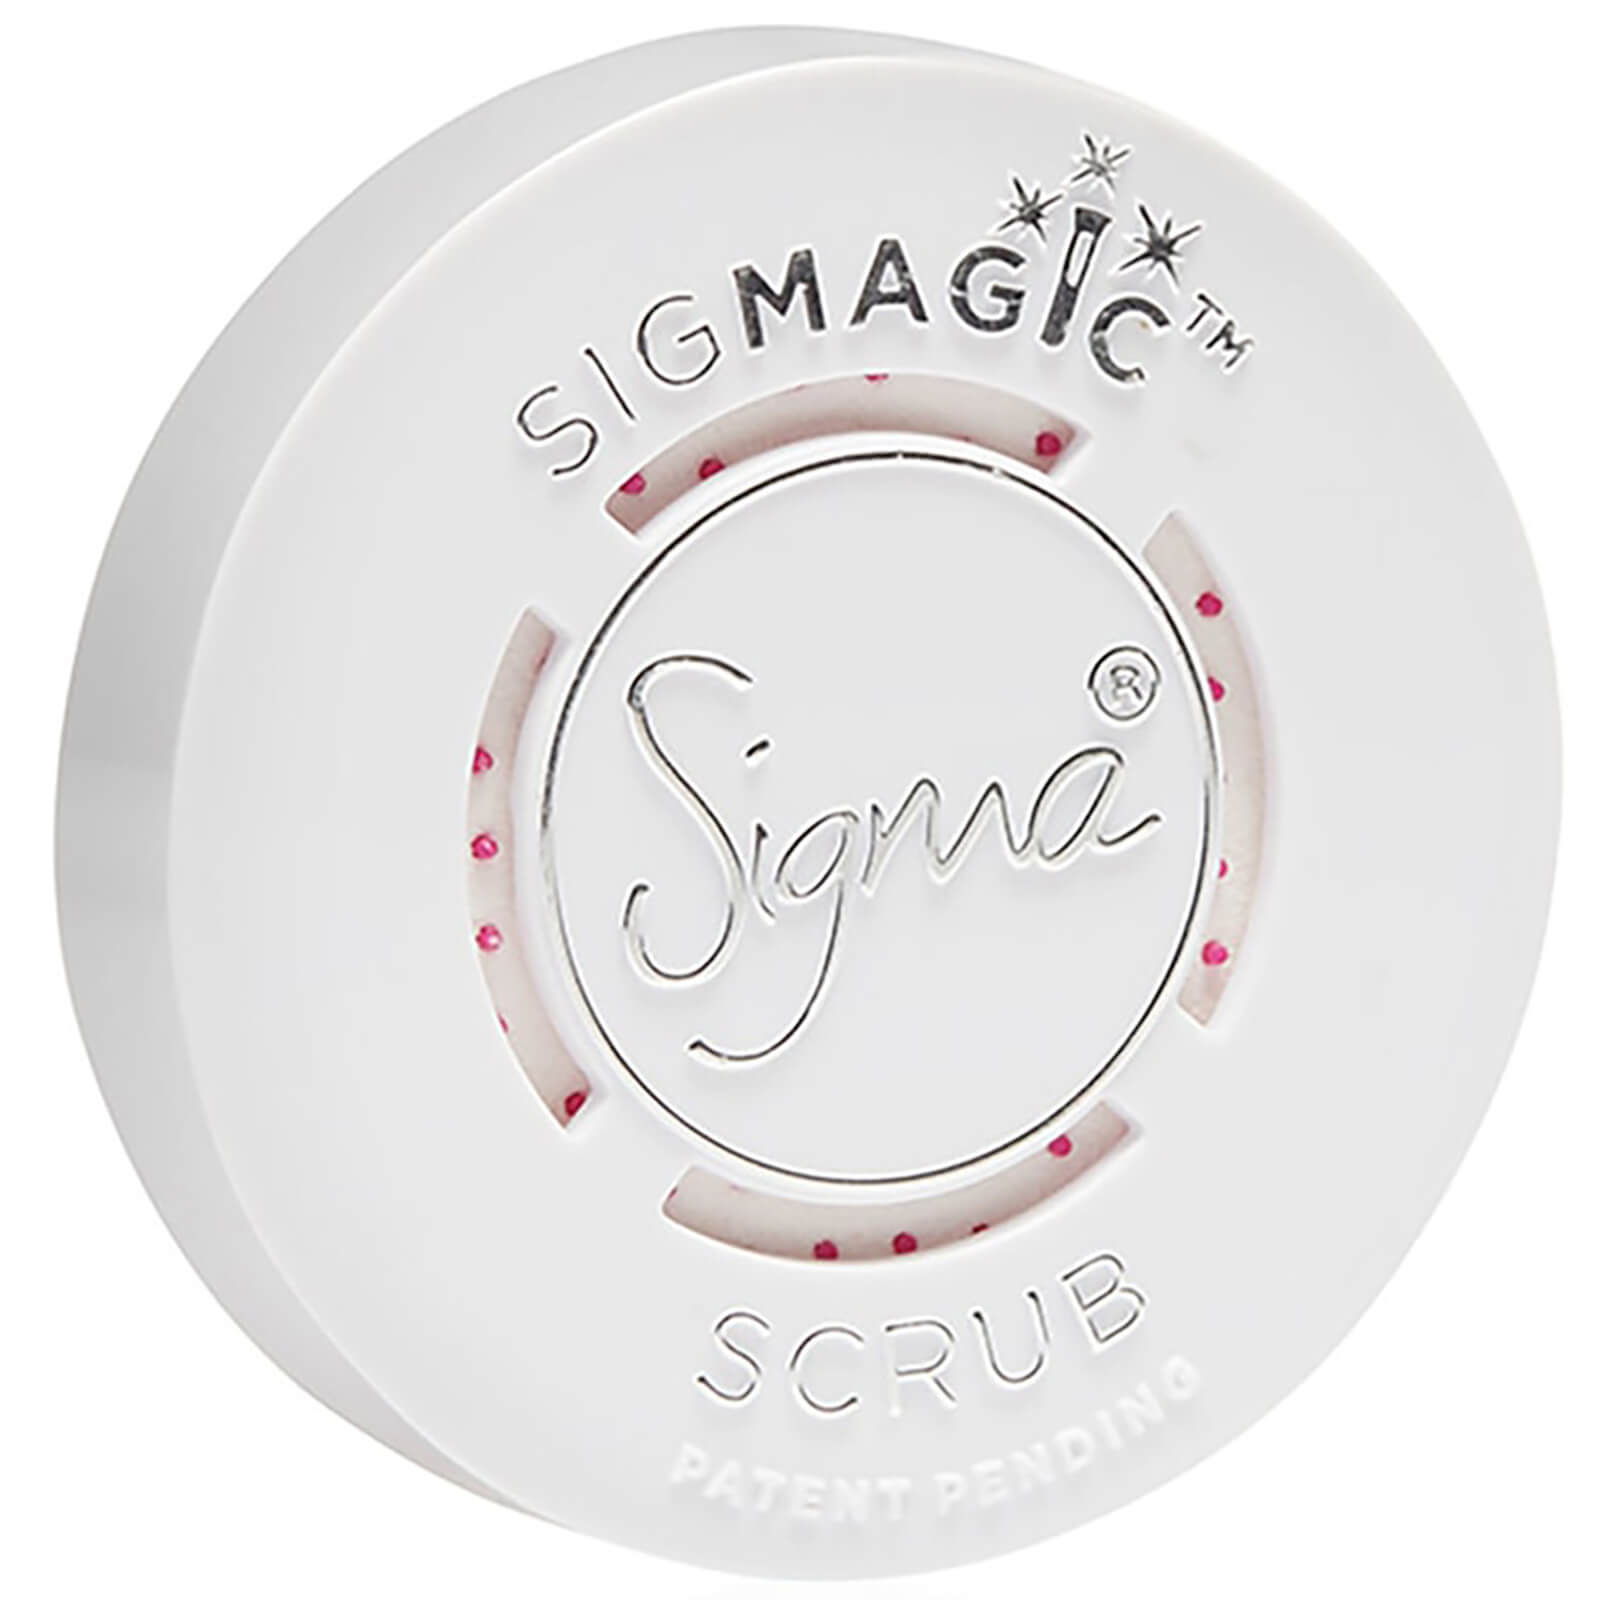 Sigma SigMagic Scrub 200ml